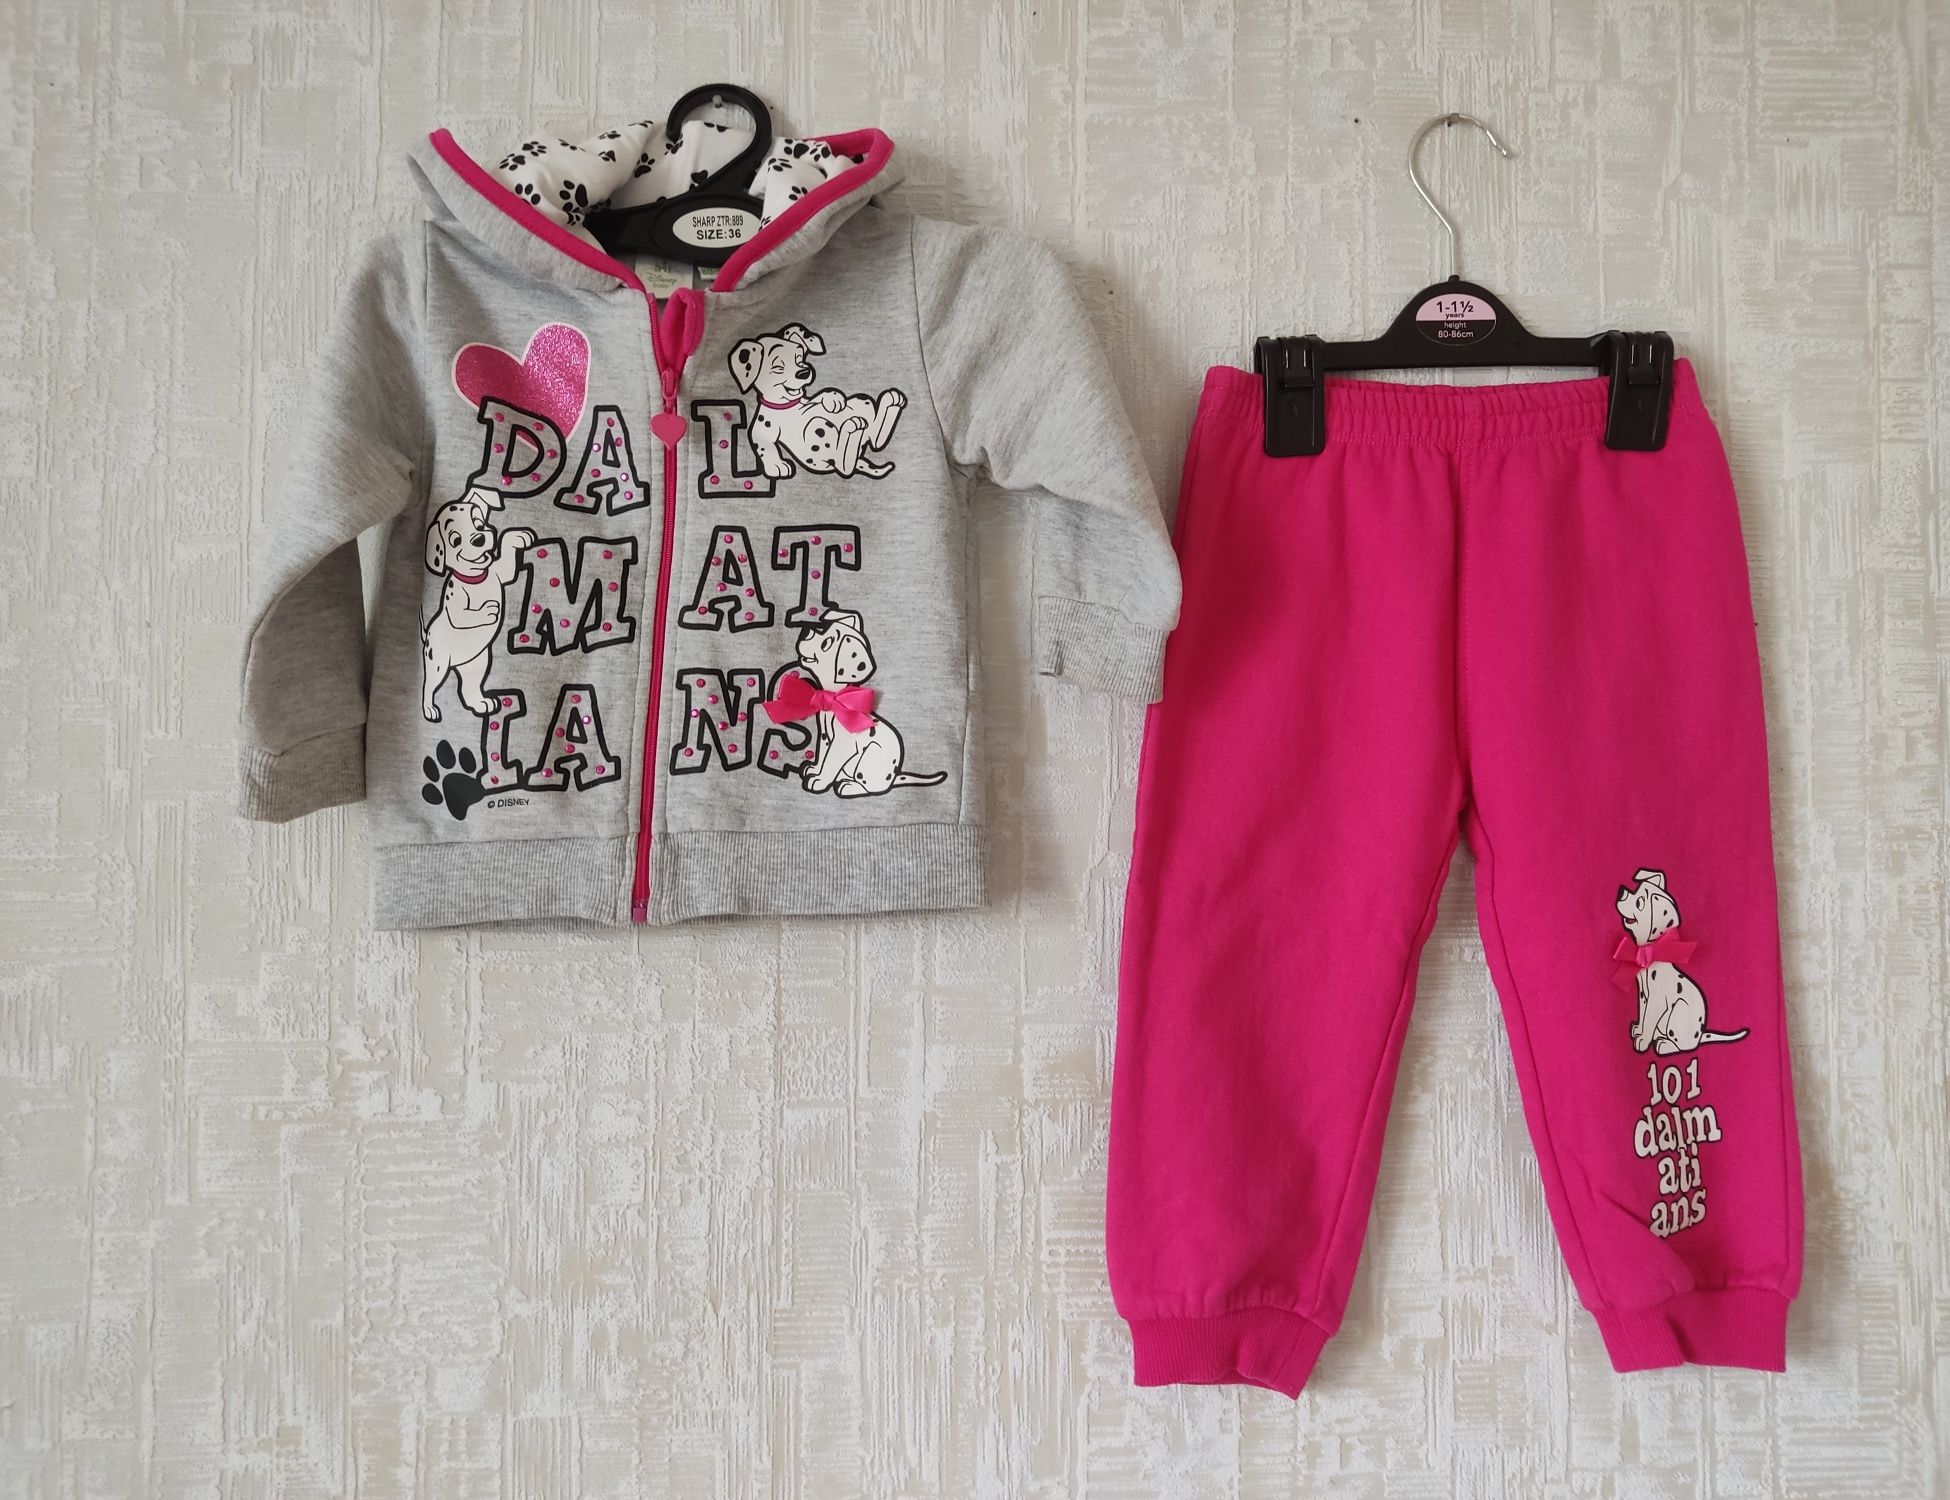 Вещи для девочки 6-12 месяцев,кофта меховушка, штанишки,костюм,кофта